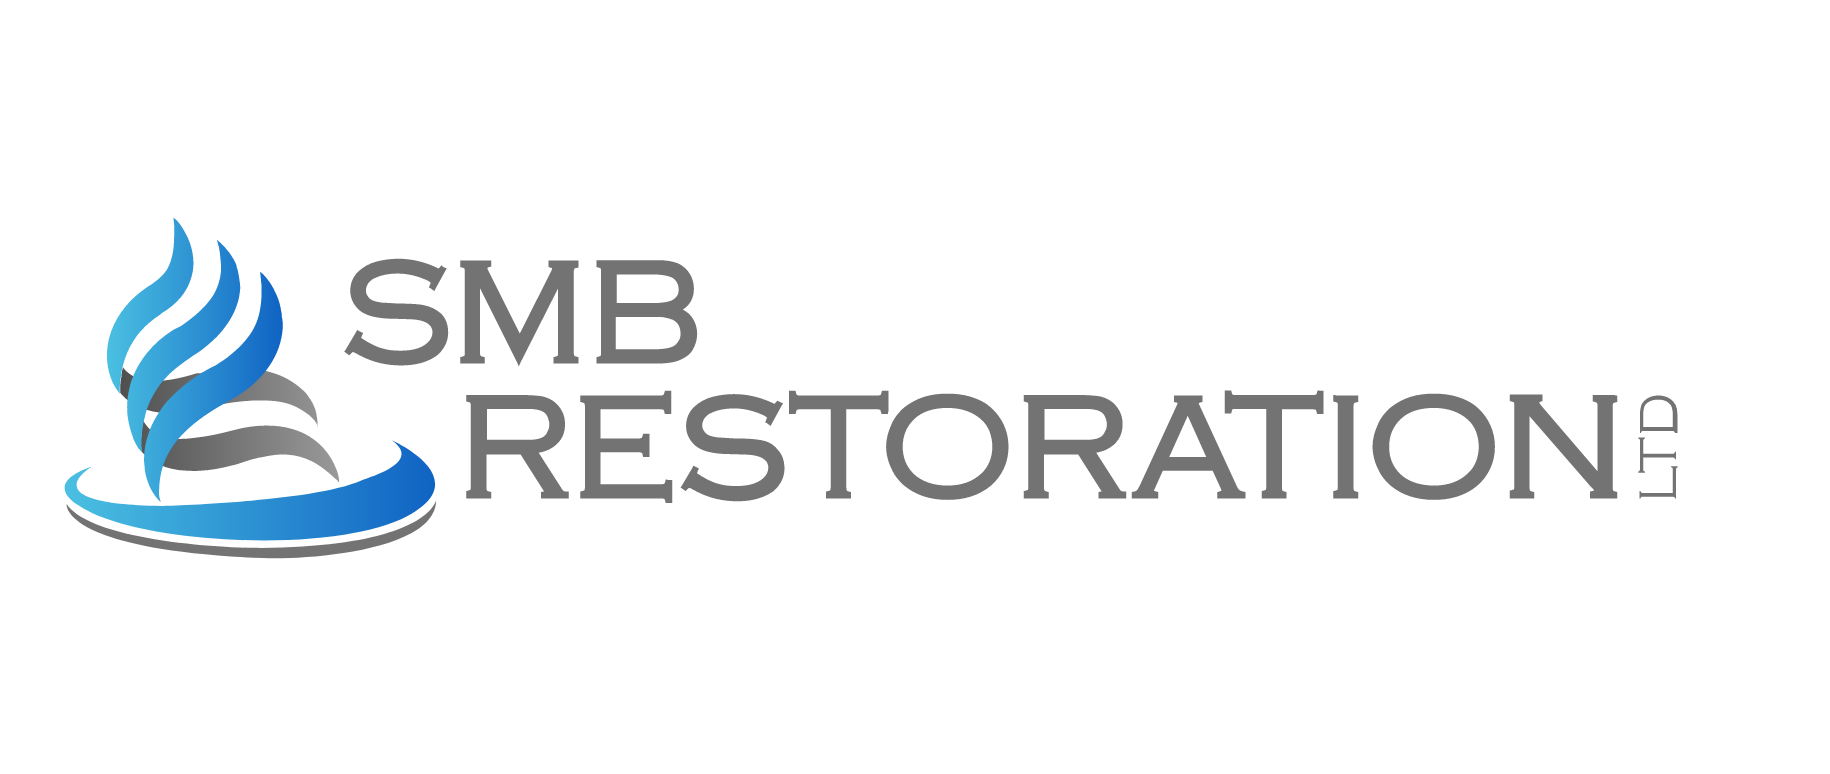 SMB Restoration